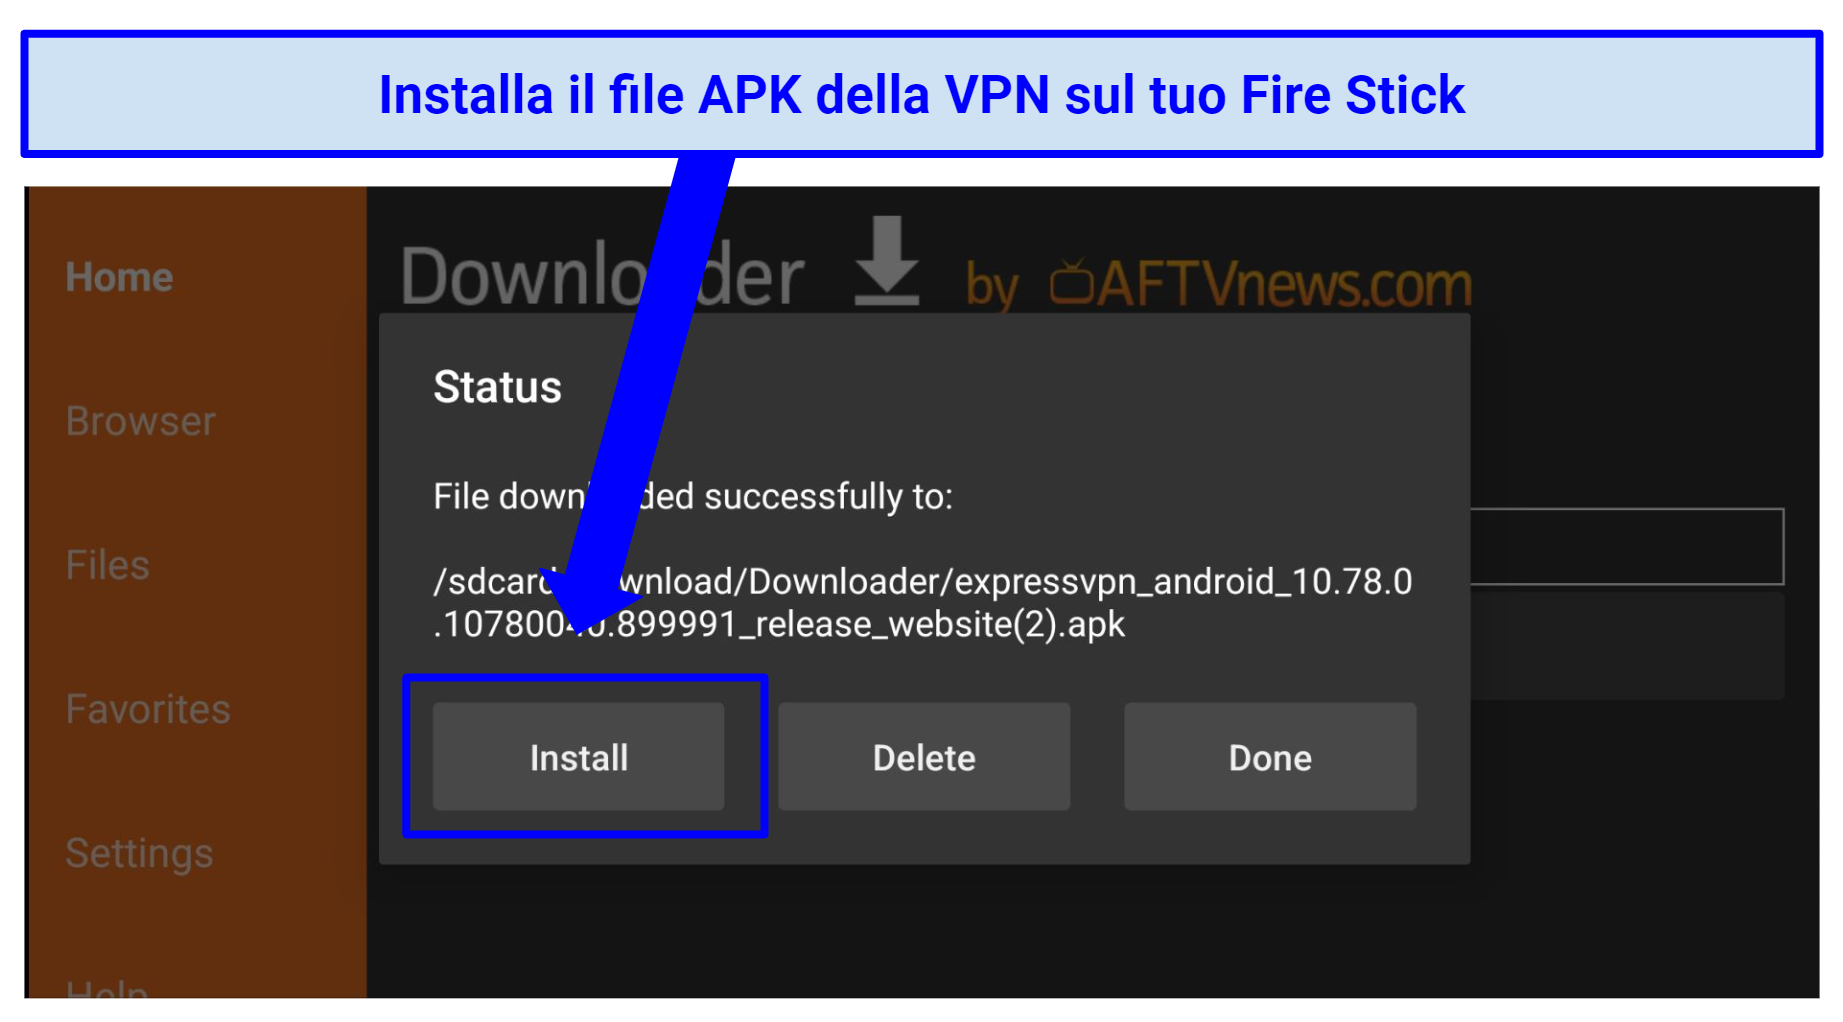 Screenshot showing Downloader app successfully downloading an APK file.